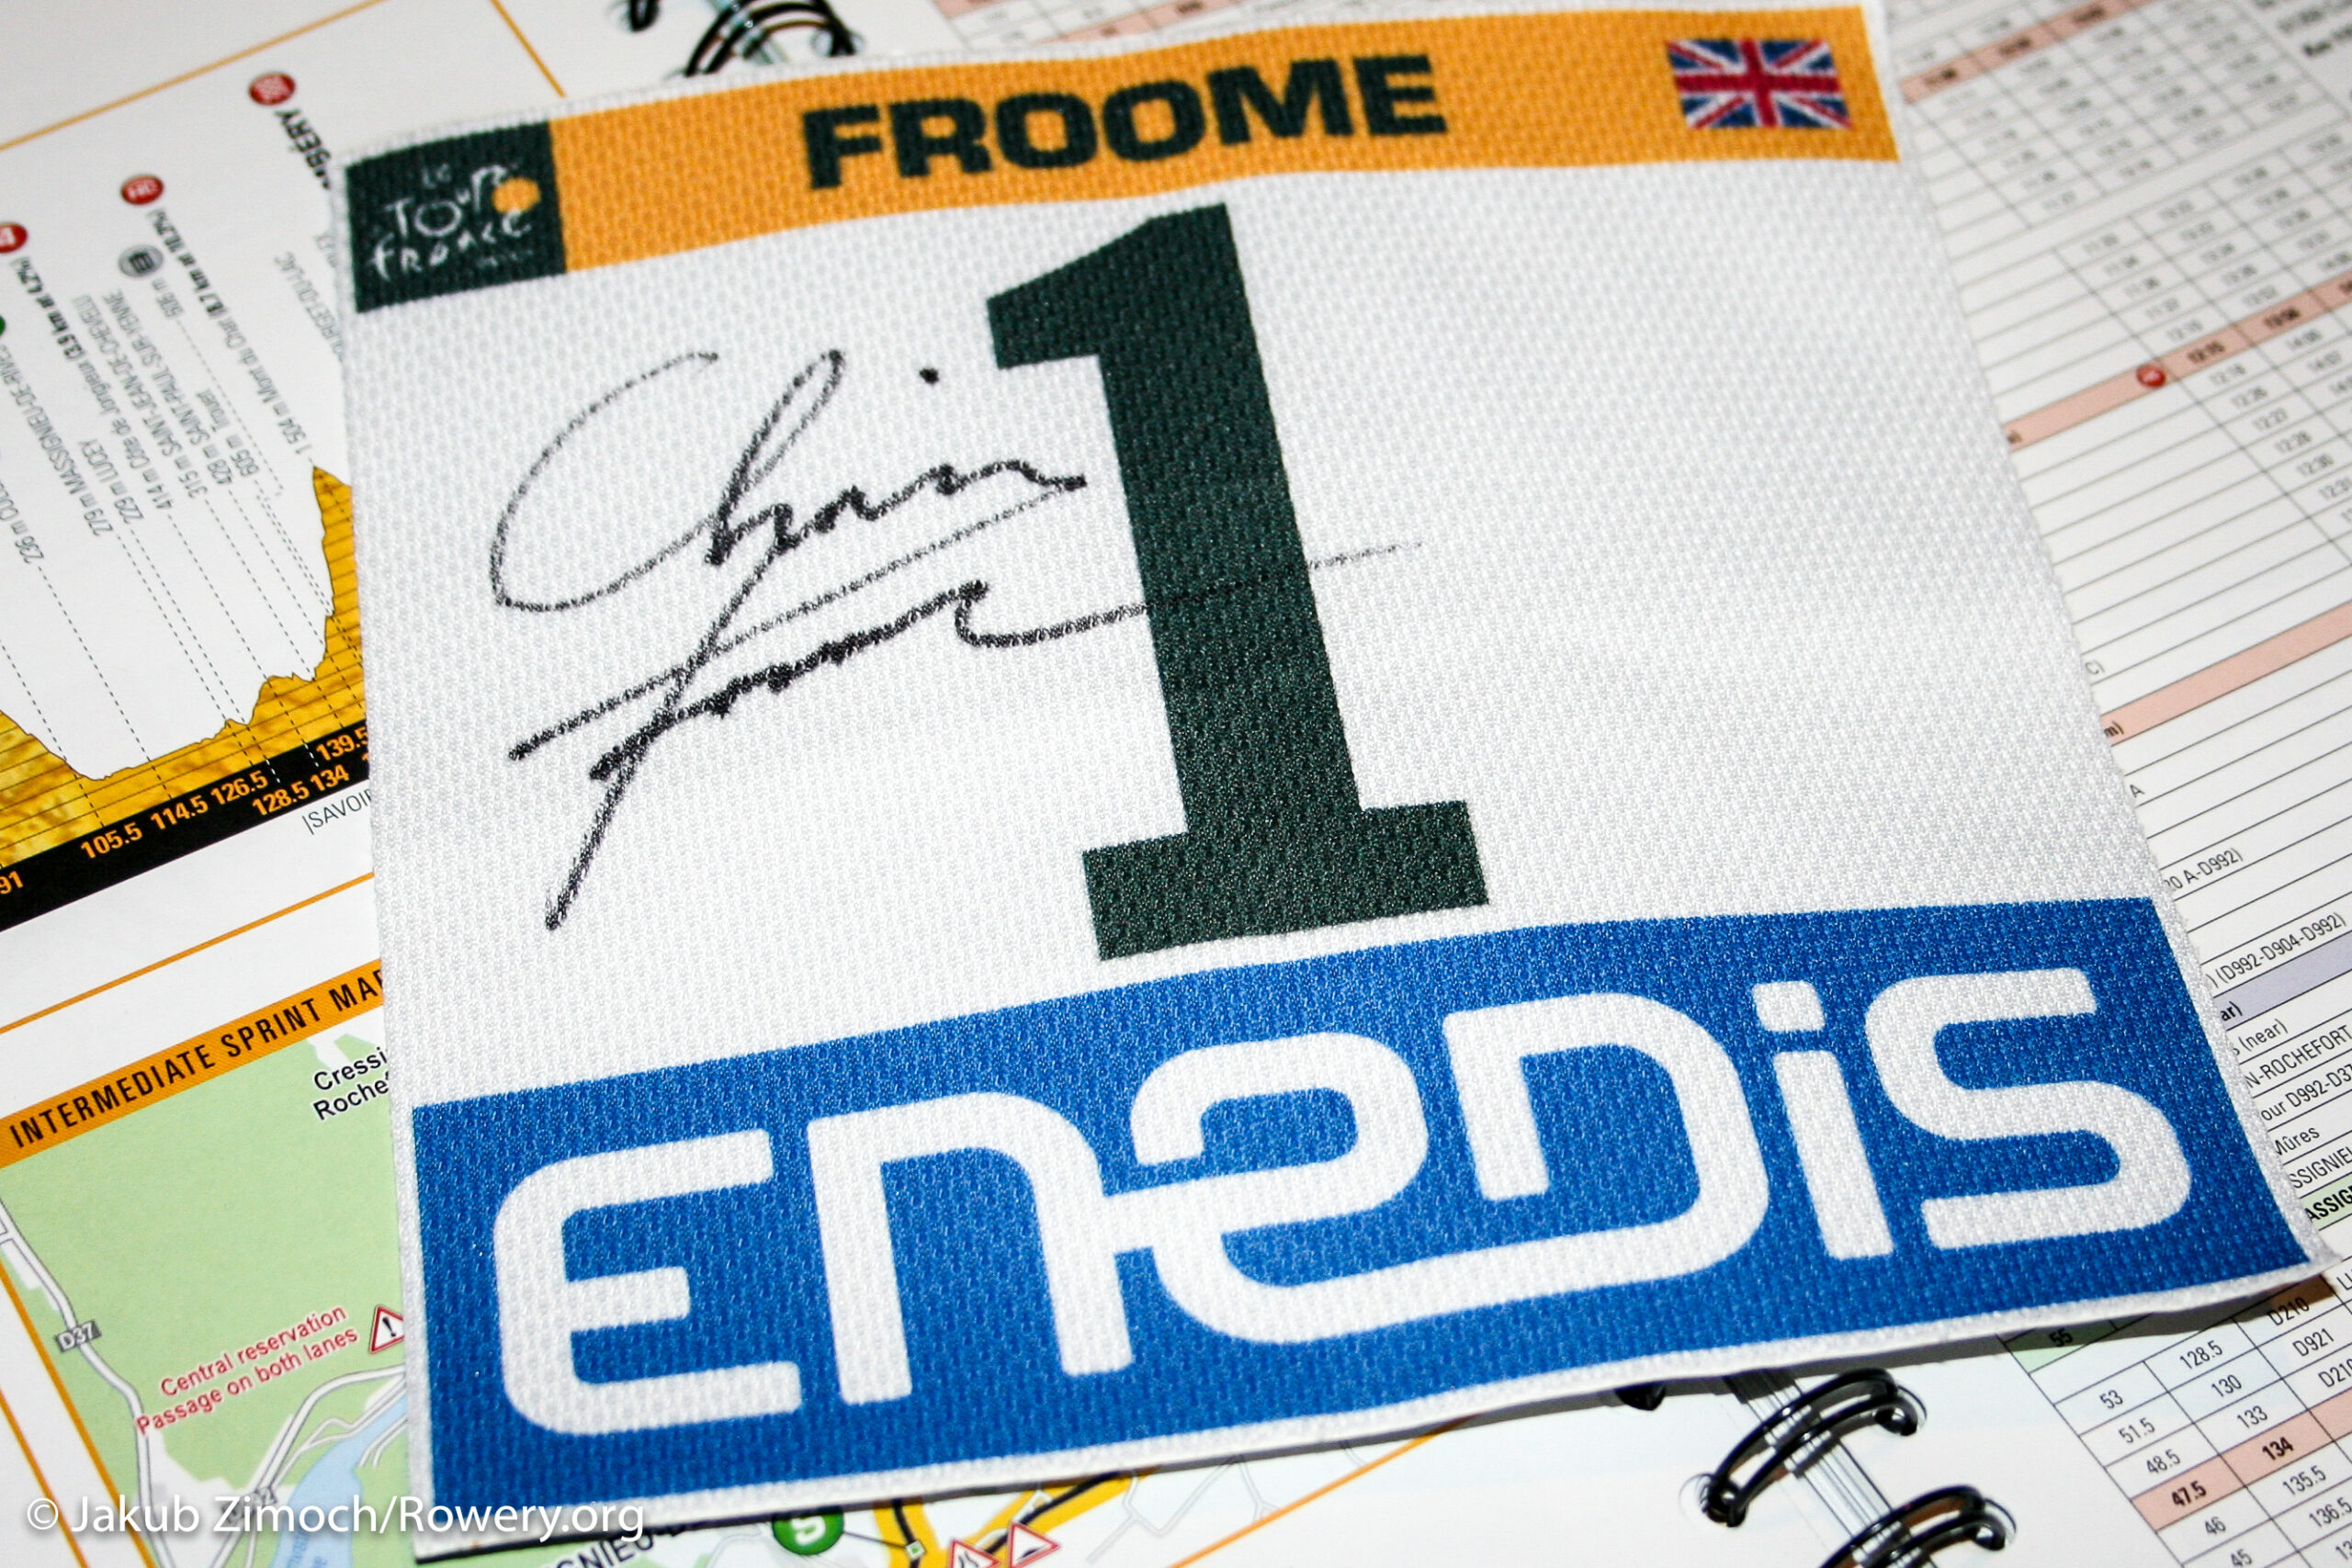 Konkurs: Numer startowy Chrisa Froome’a z autografem